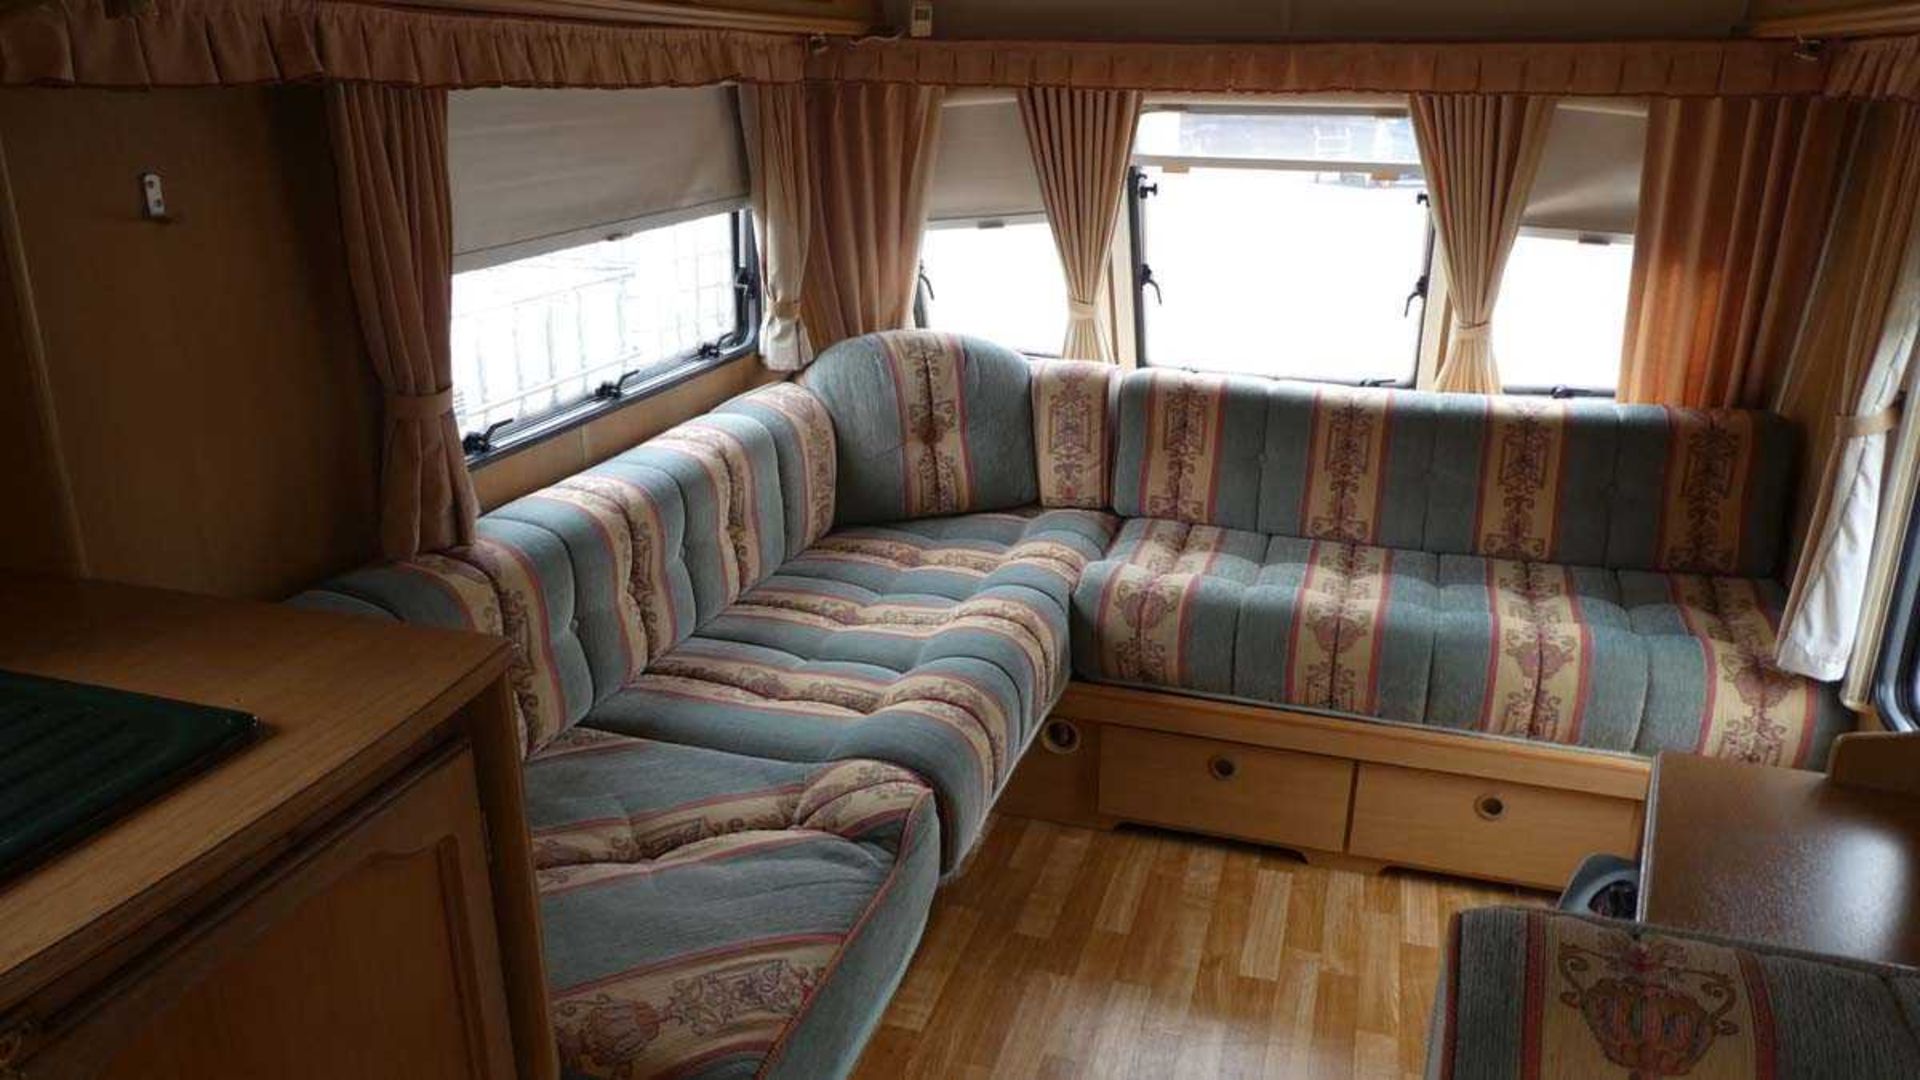 Abi Award Morningstar 18ft touring caravan, 4-5 berth with cooker, refrigerator, WC, shower, - Image 4 of 12